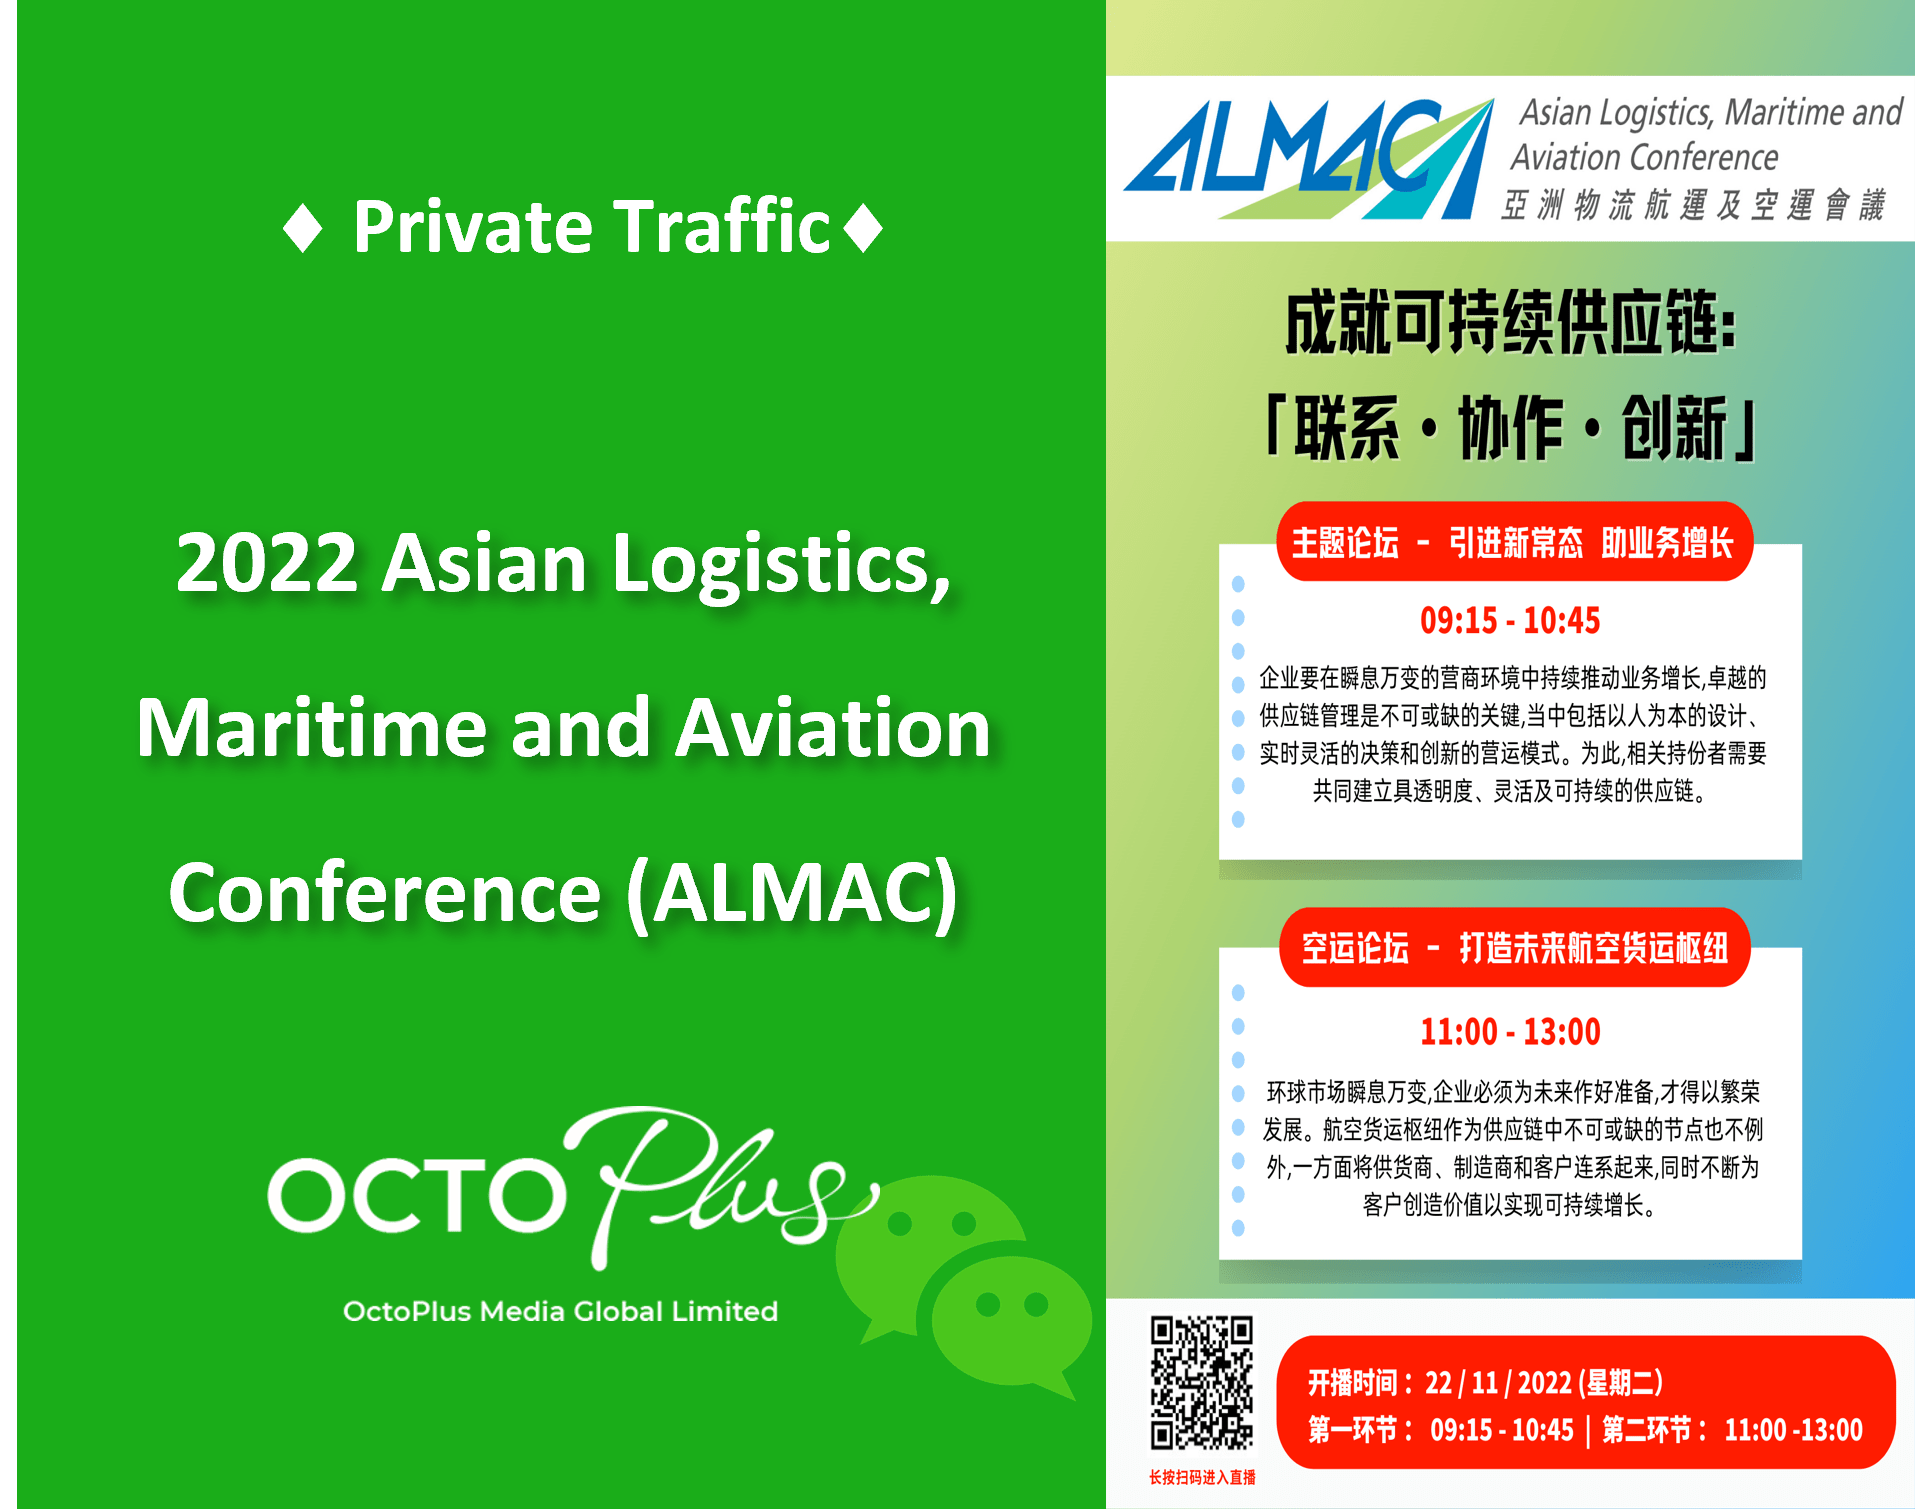 WeChat Private Traffic - Targeted Communty - ALMAC 2022 - Logistics